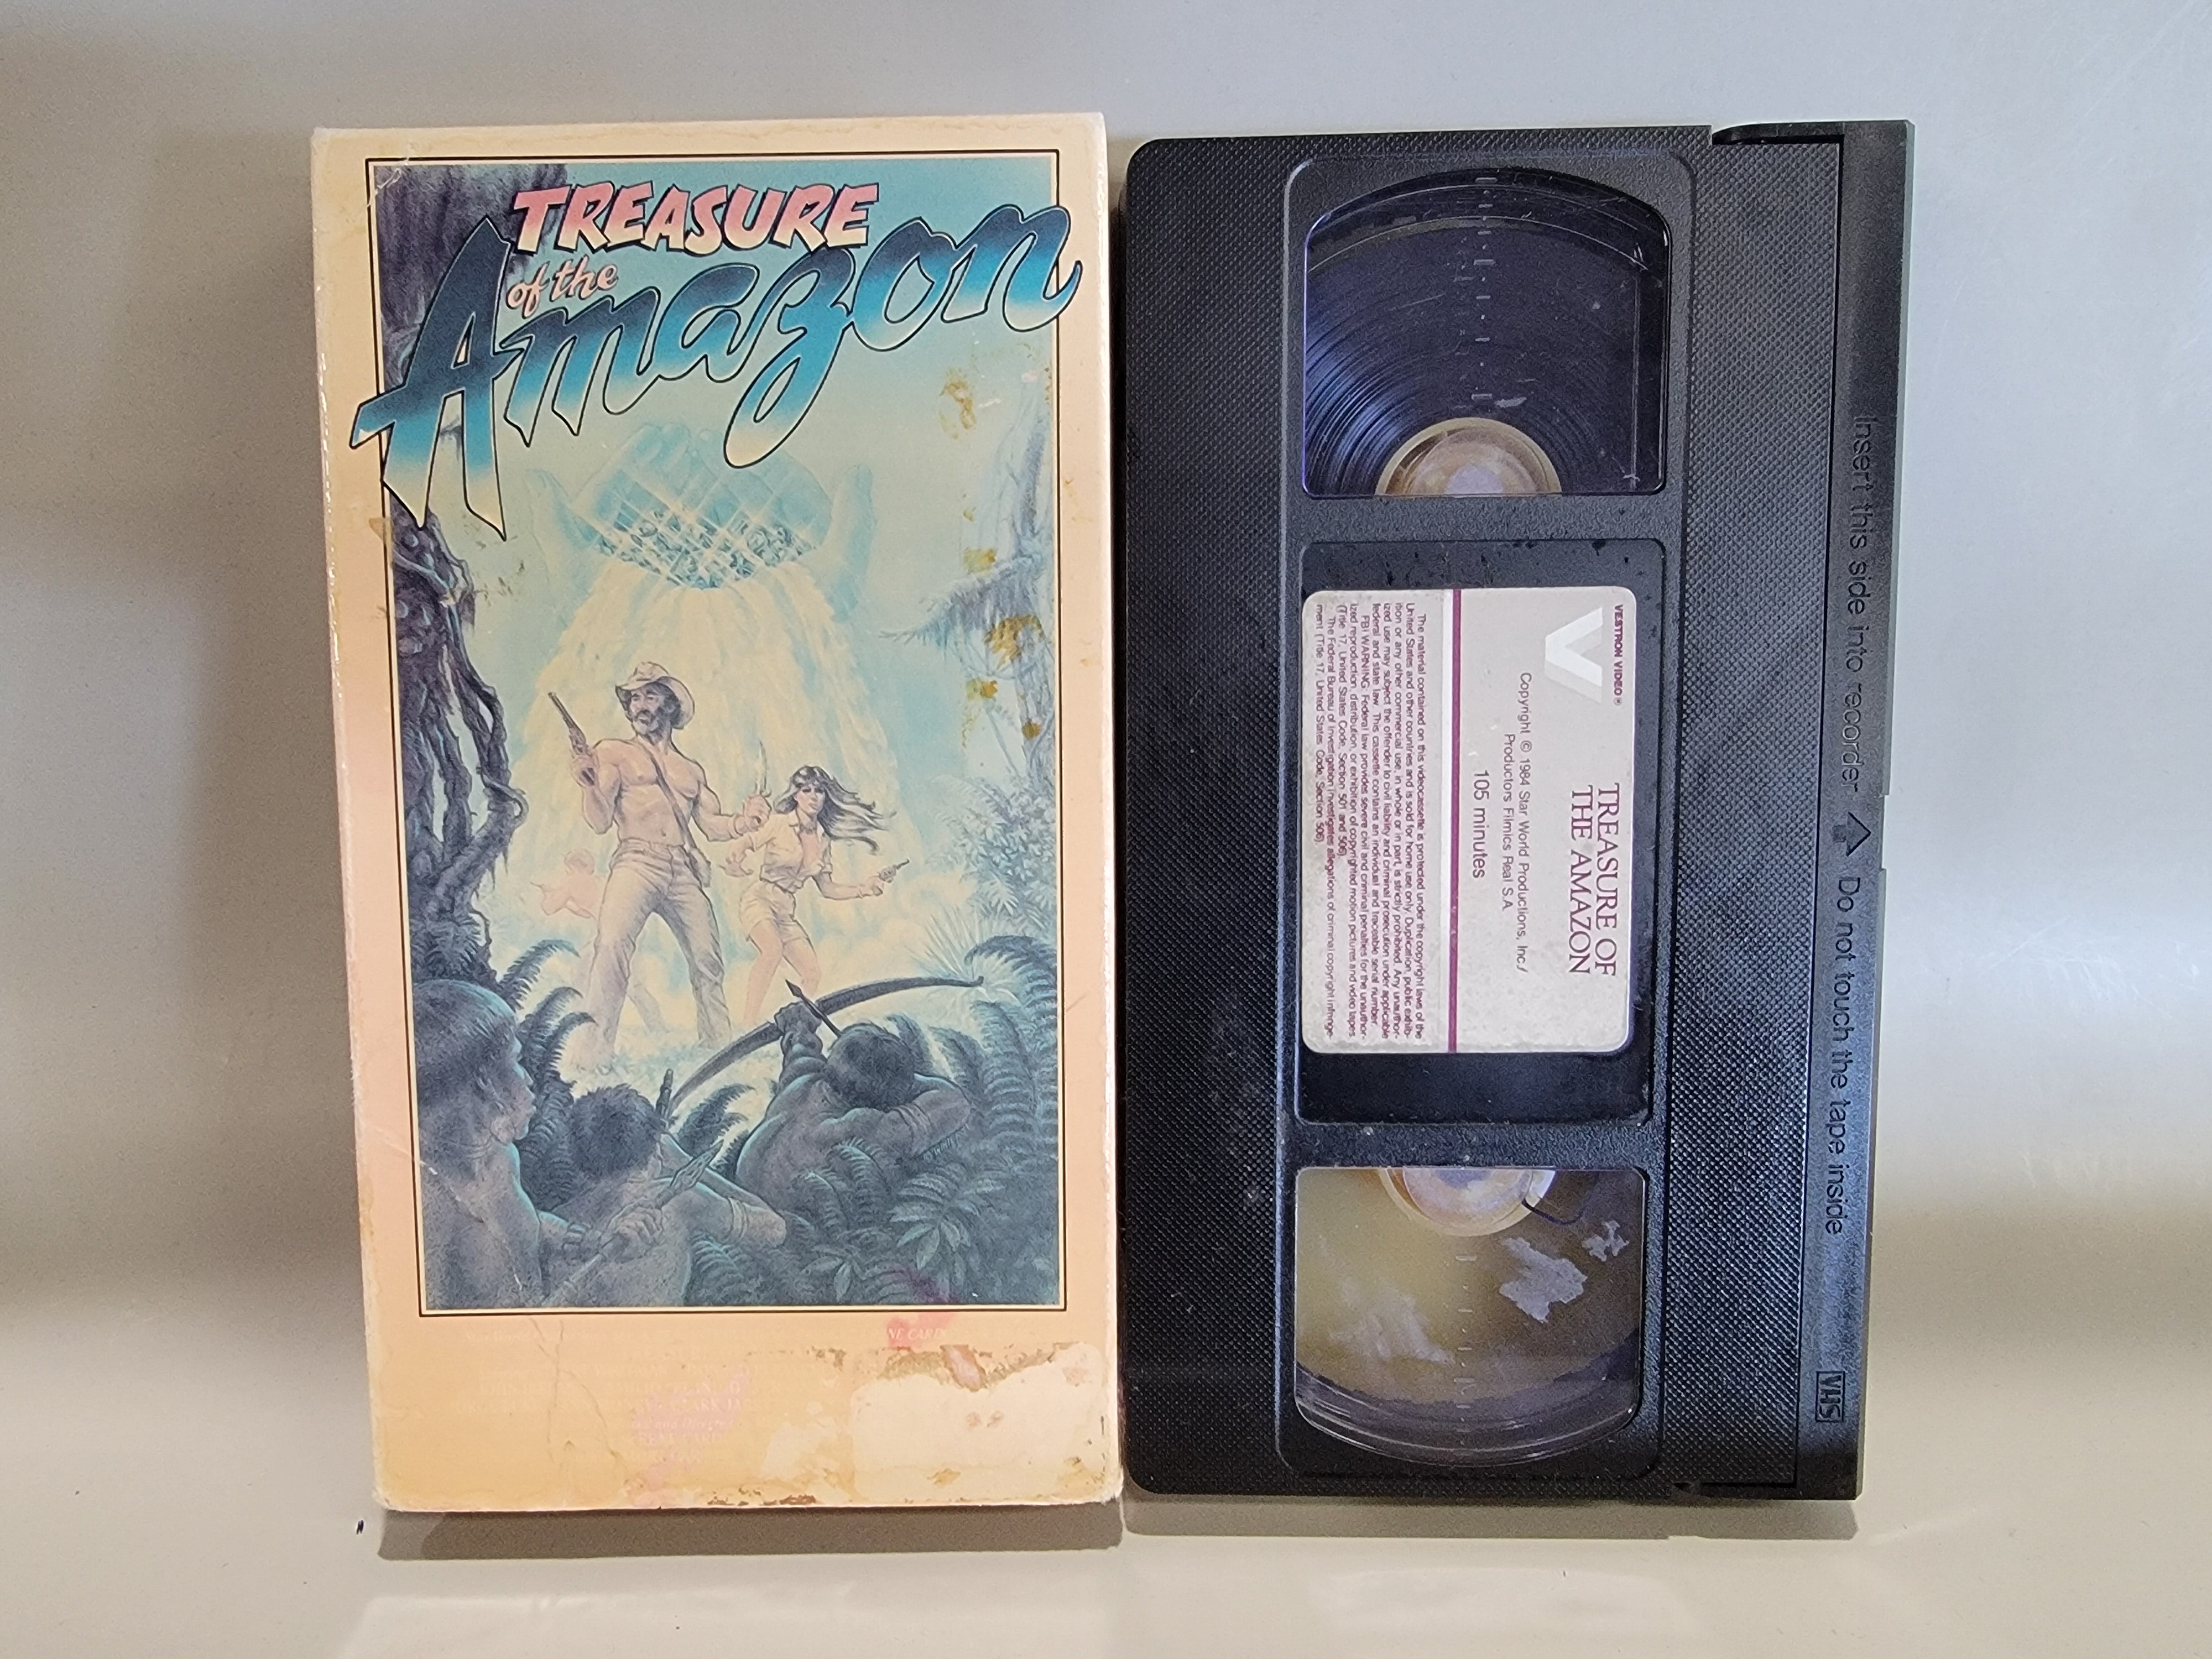 TREASURE OF THE AMAZON VHS [USED]